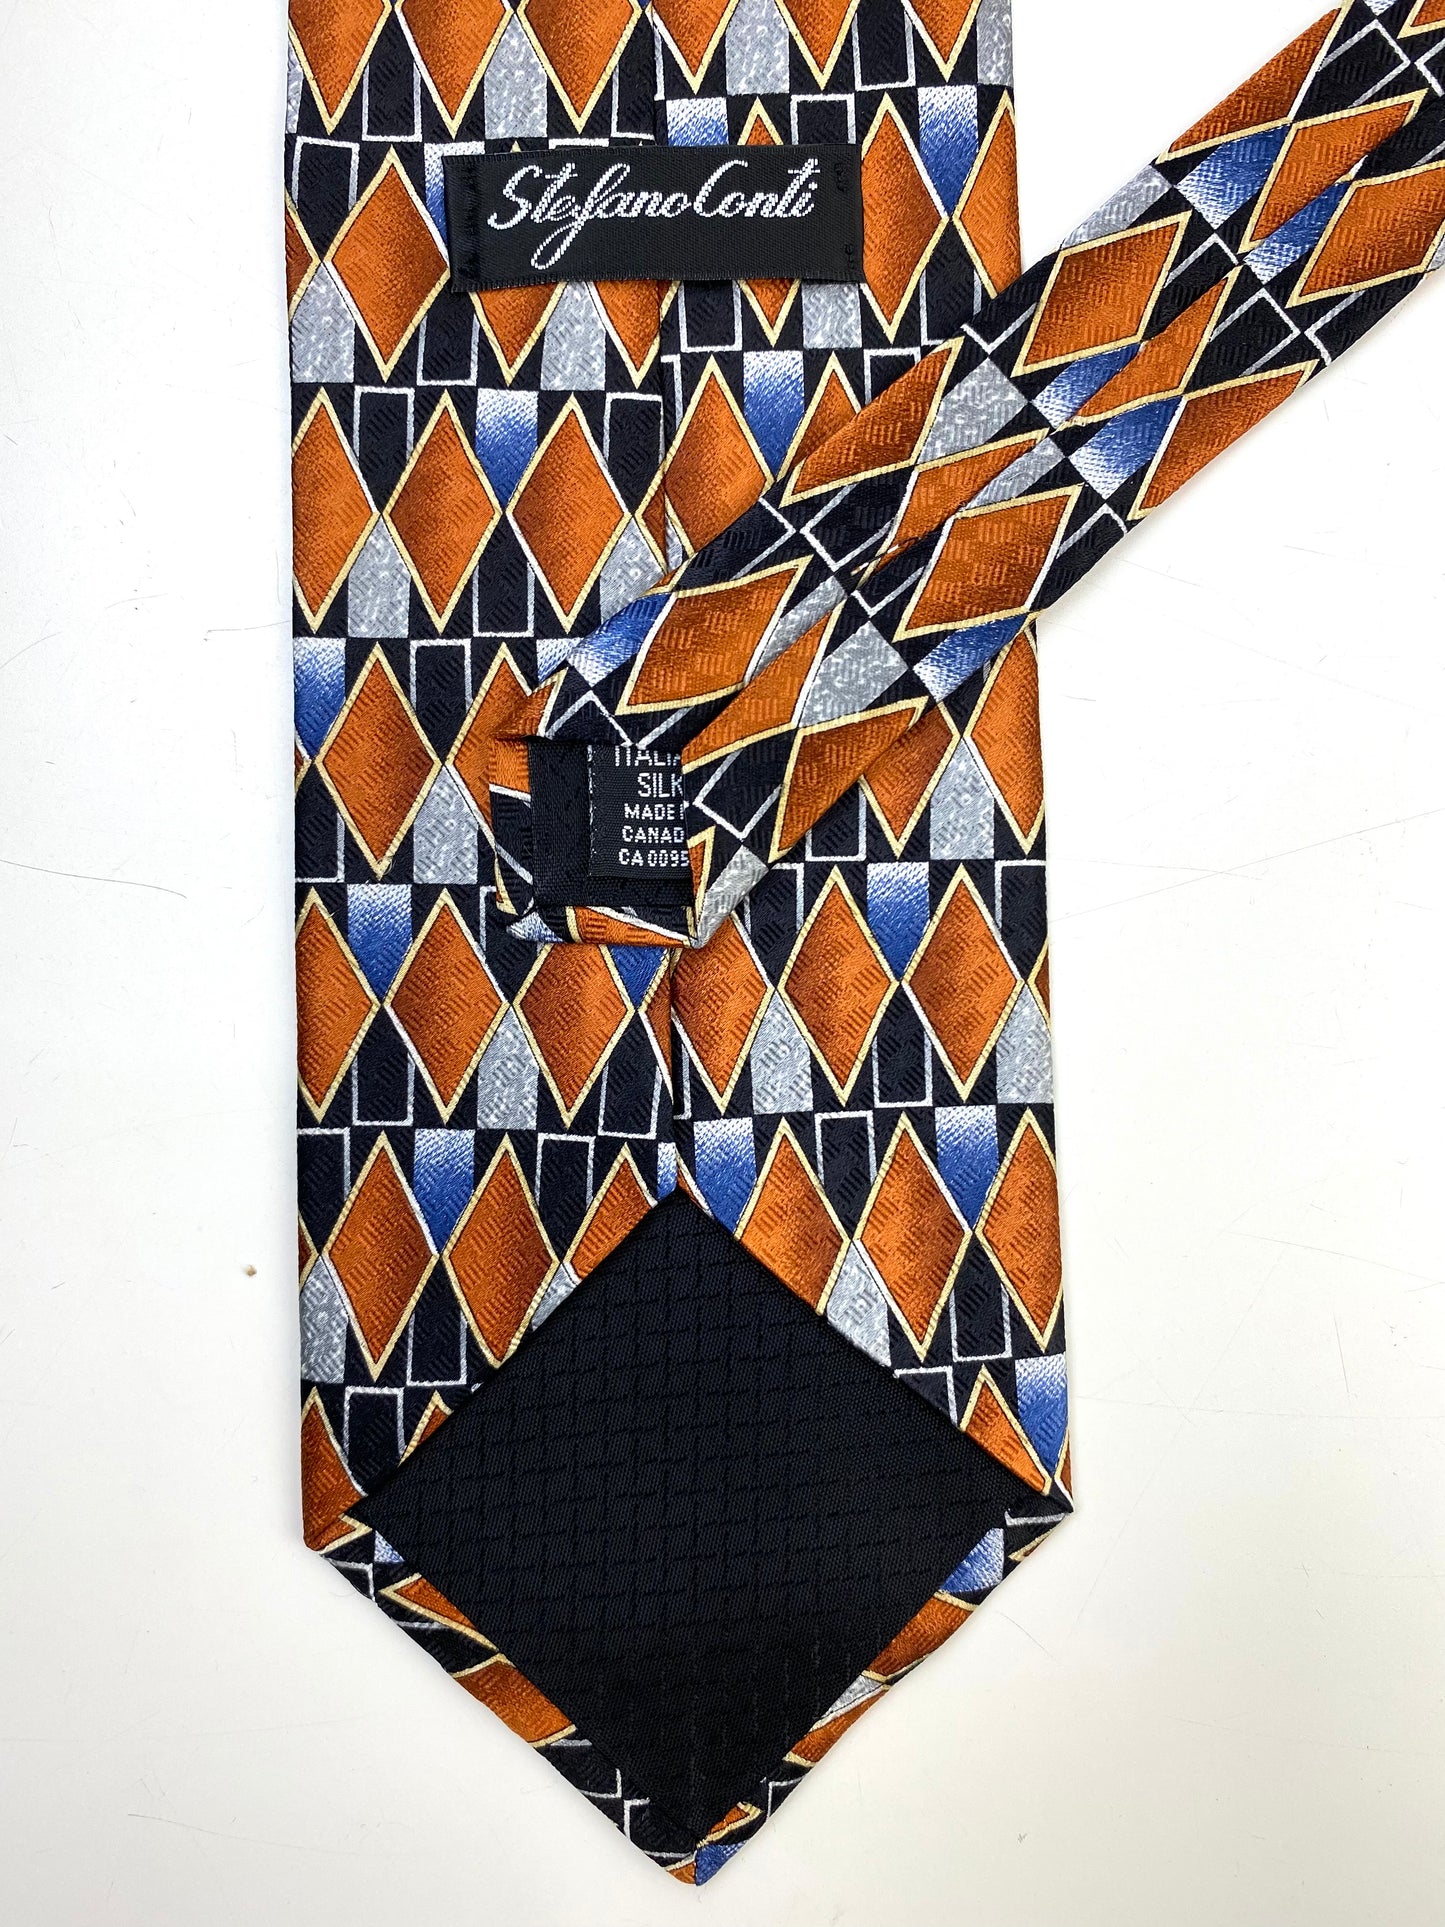 Back and labels of: 90s Deadstock Silk Necktie, Men's Vintage Black/ Brown/ Blue Geometric Pattern Tie, NOS